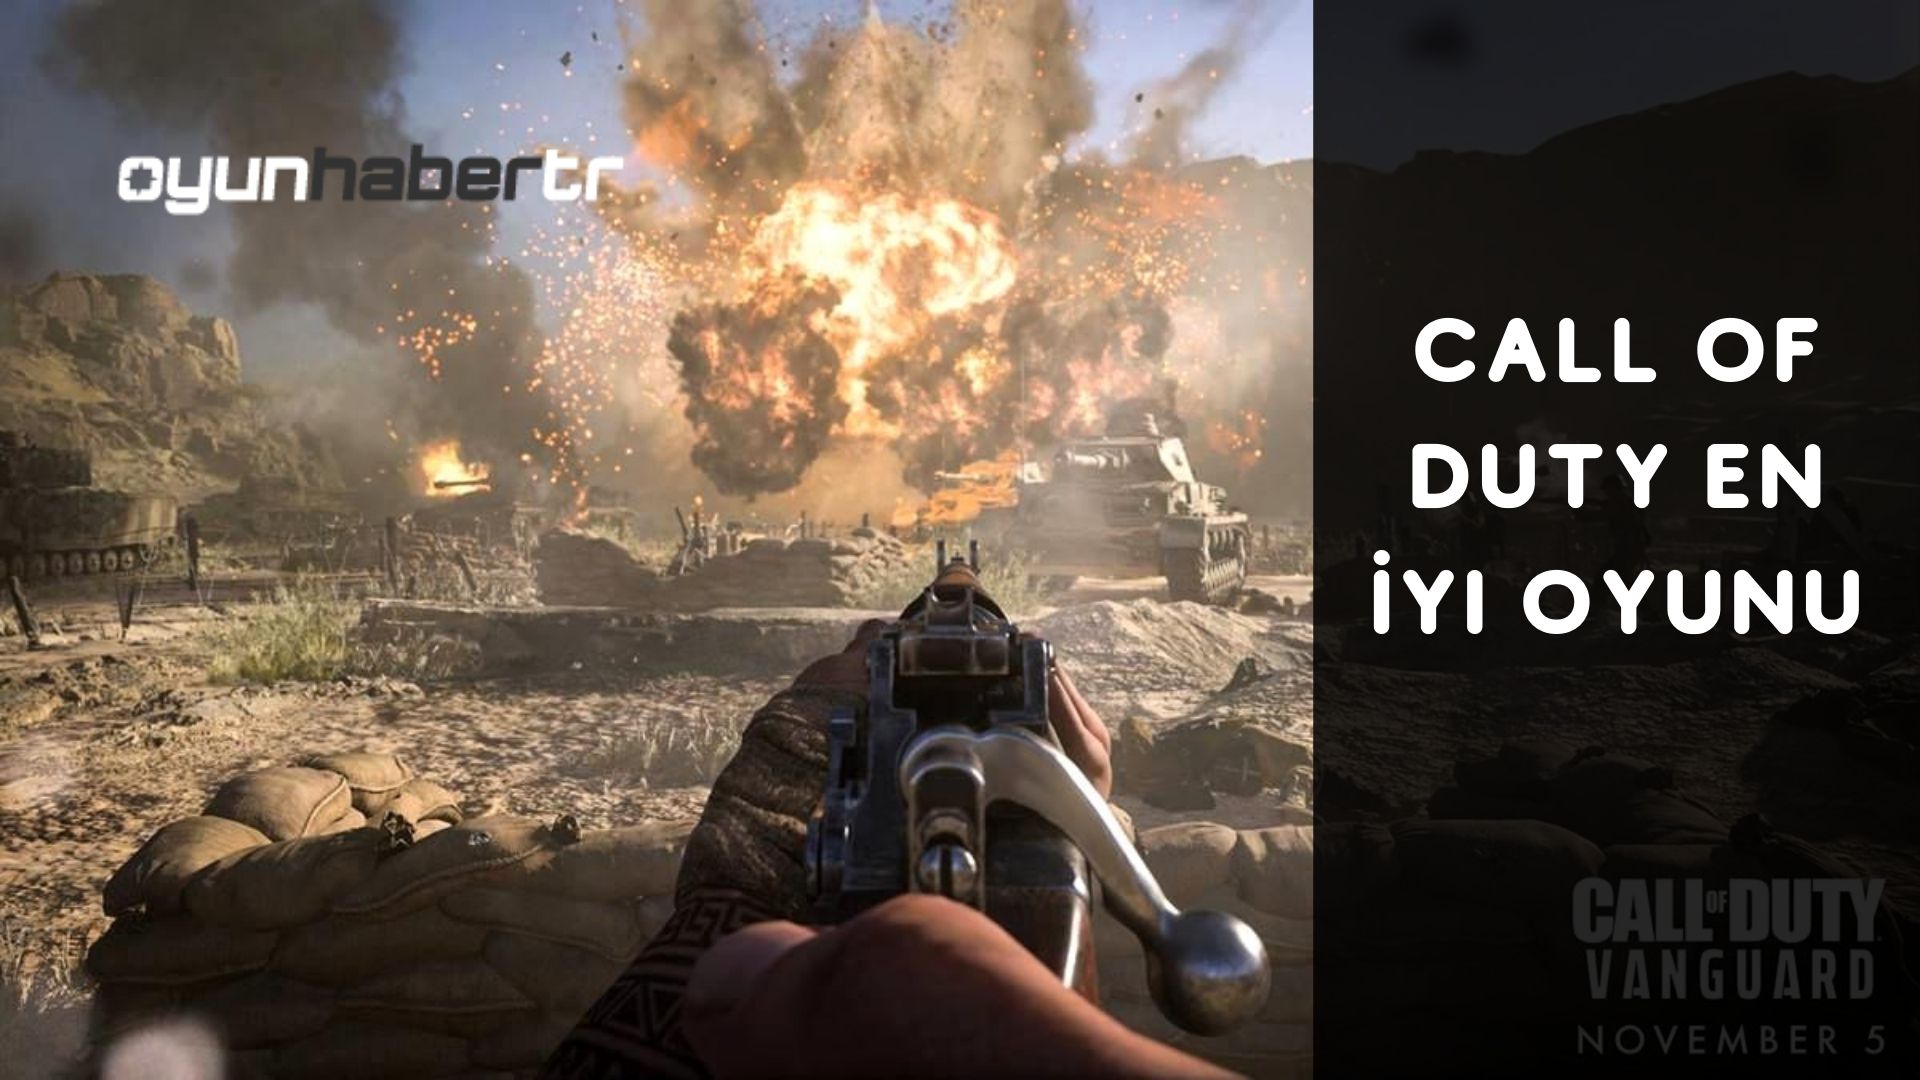 Call Of Duty En İyi Oyunu